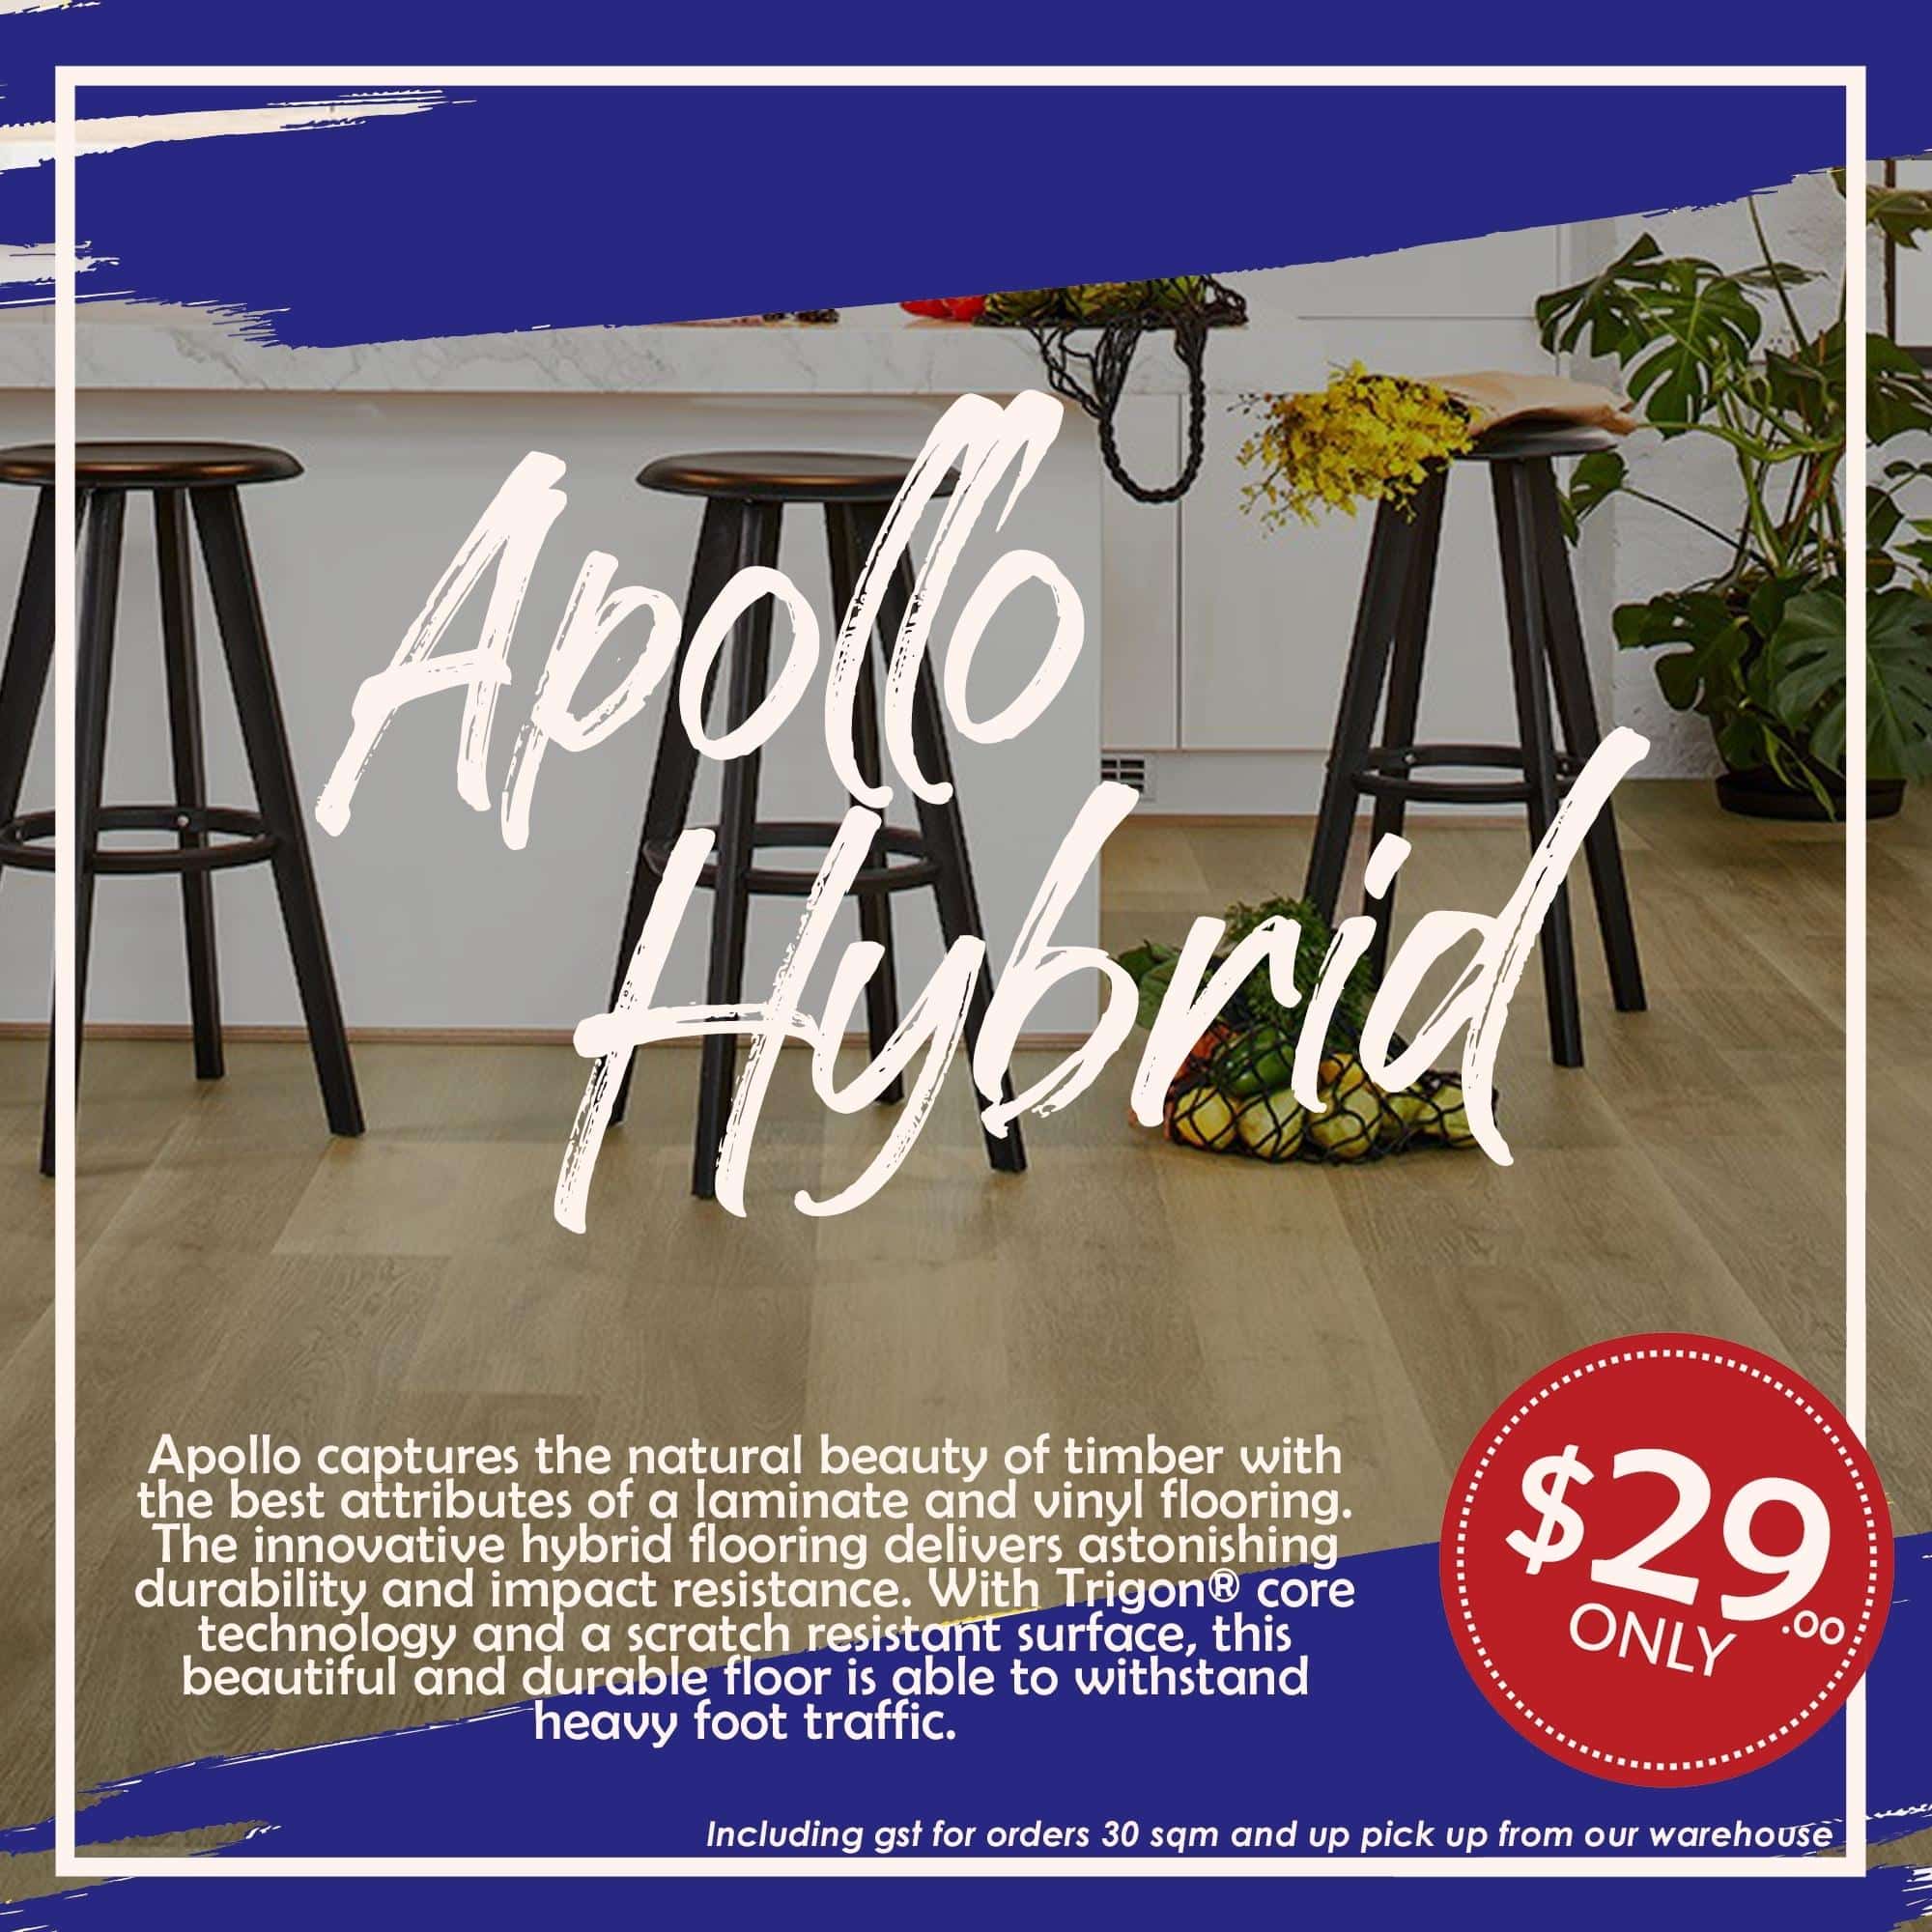 Image presents Vinyl Flooring and abollo hybrid